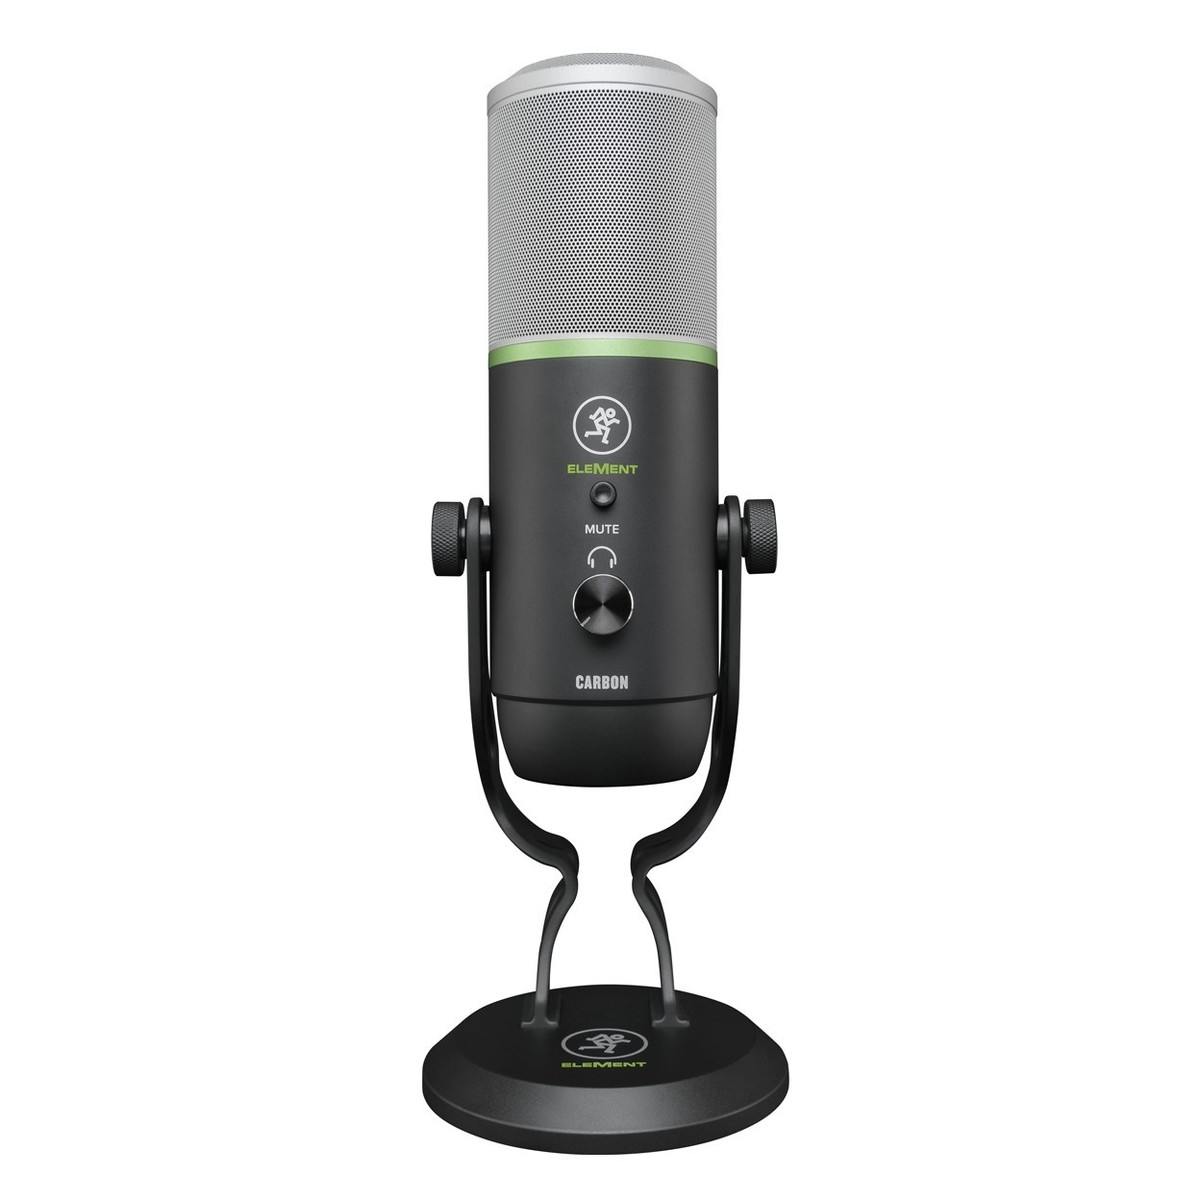 Mackie Carbon Premium USB Microphone - DY Pro Audio